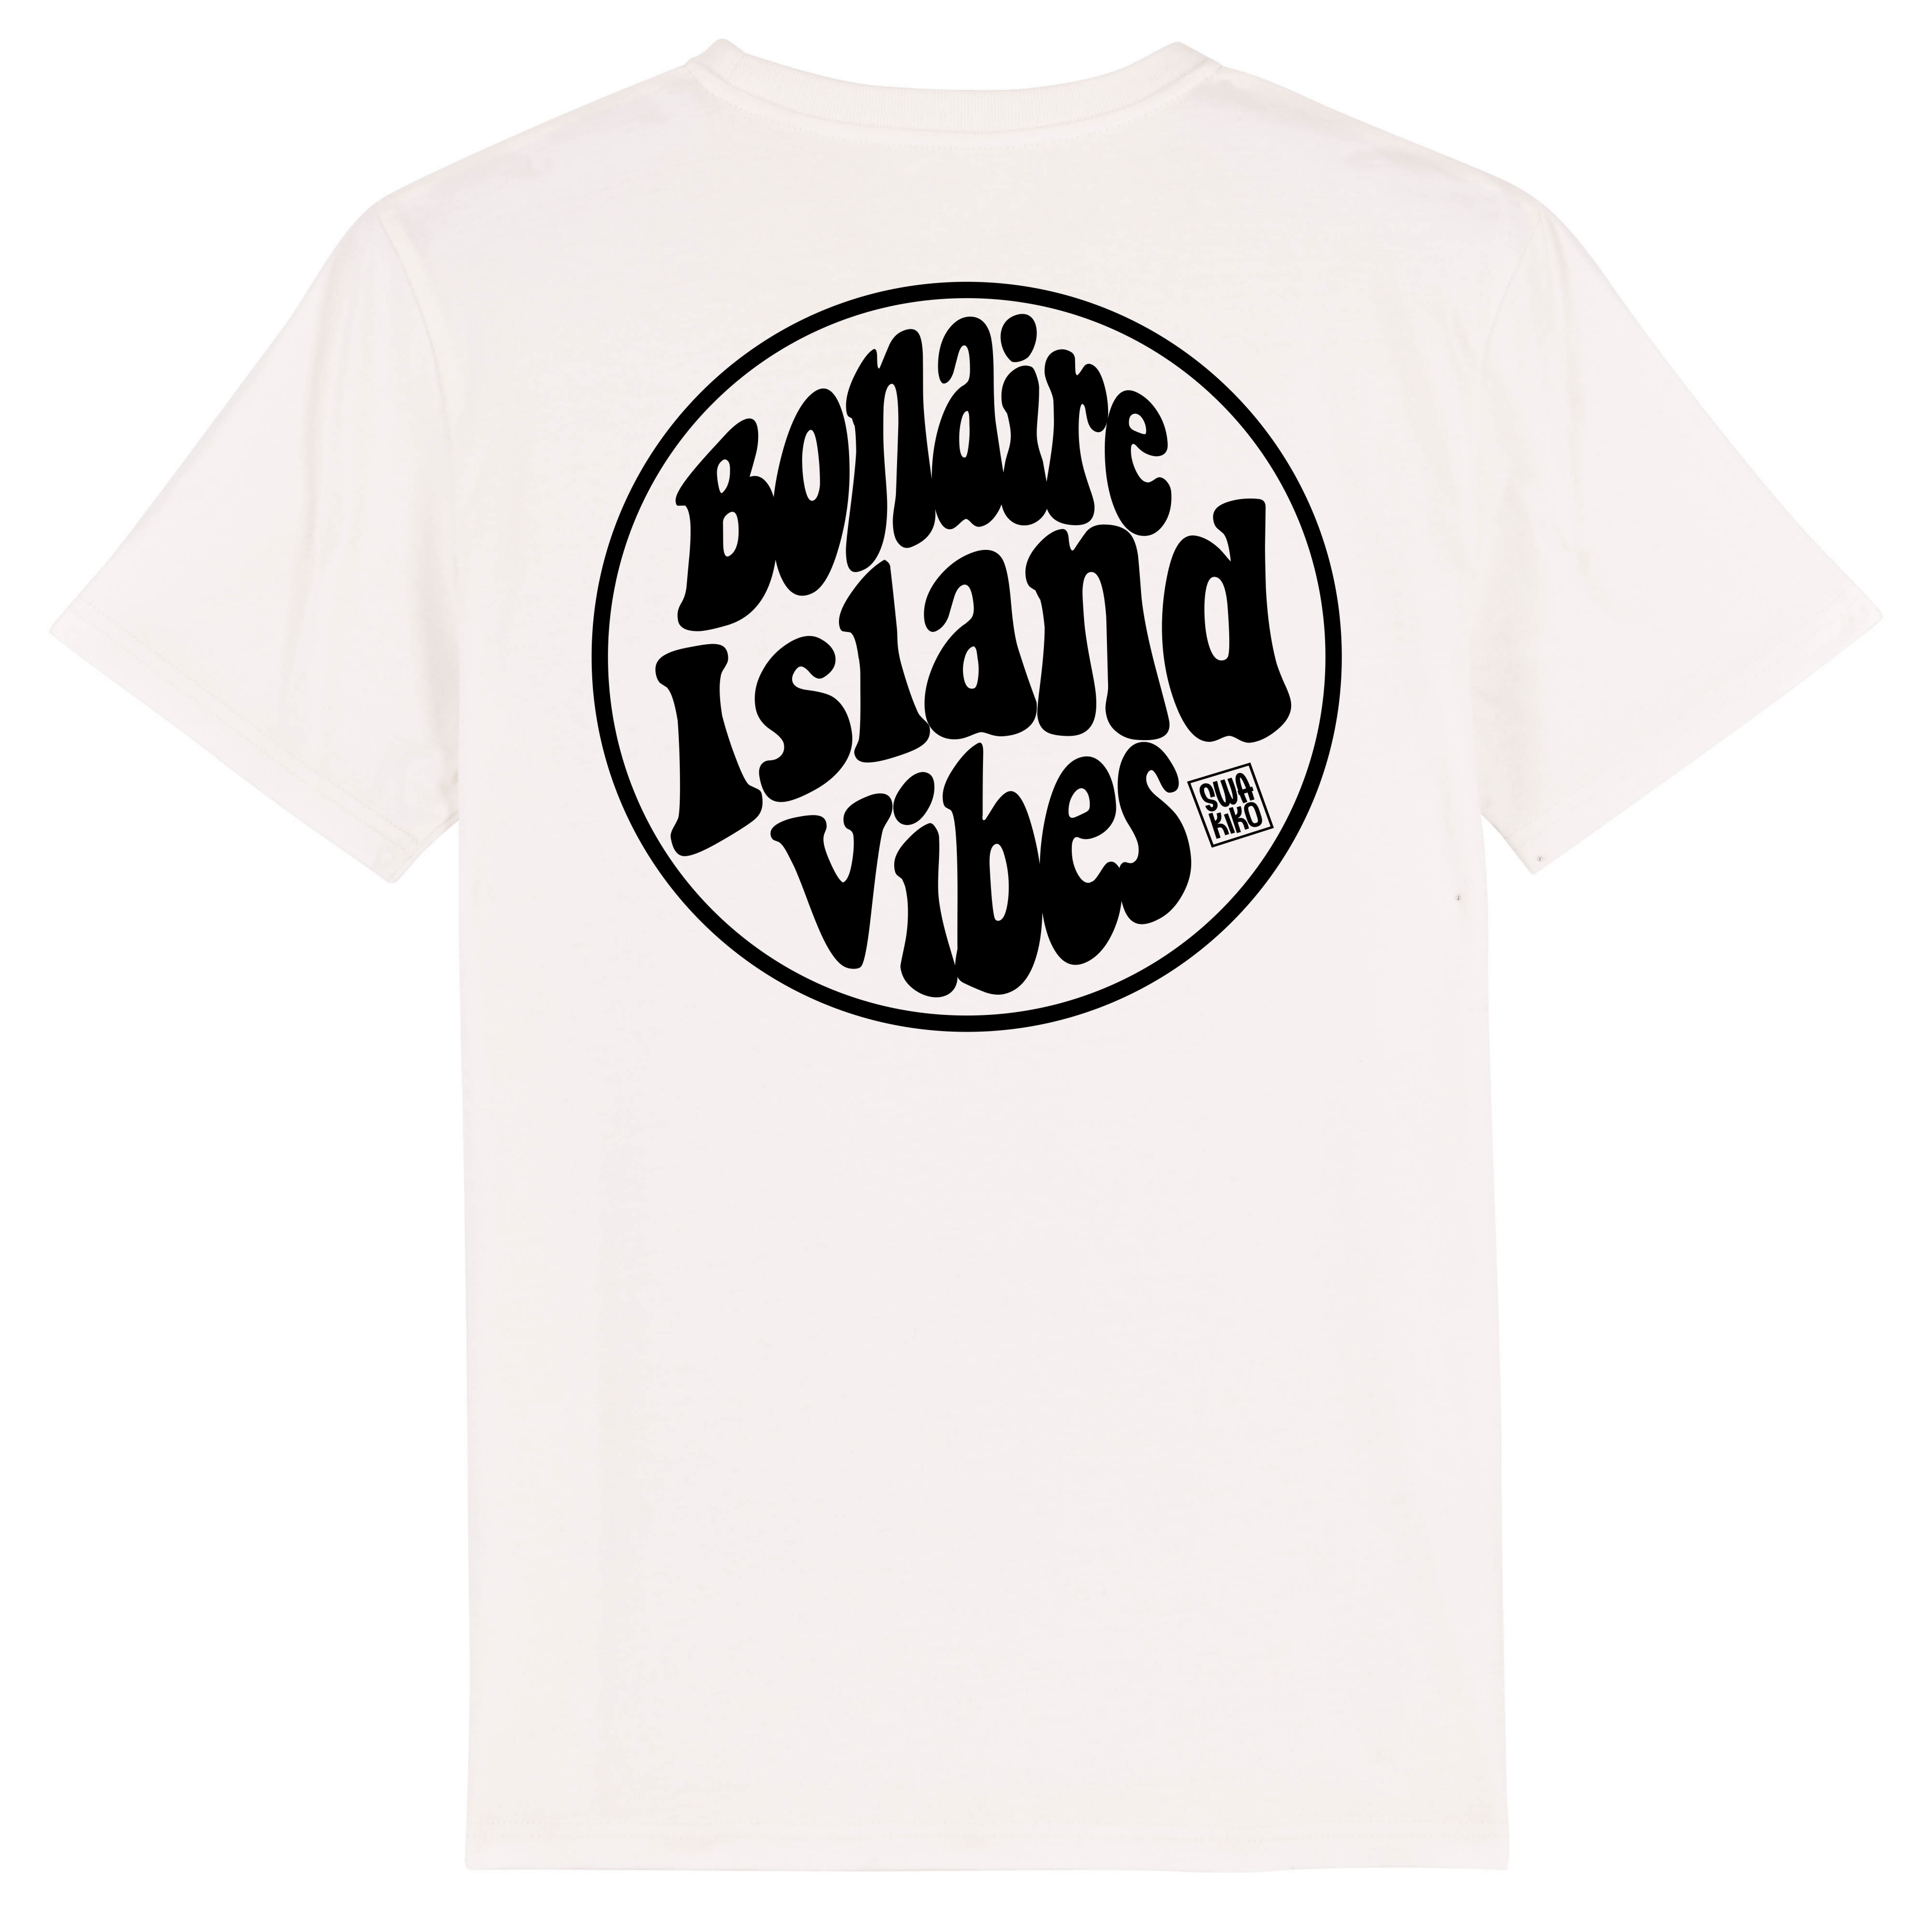 Bonaire Island Vibes logo T-shirt men, white